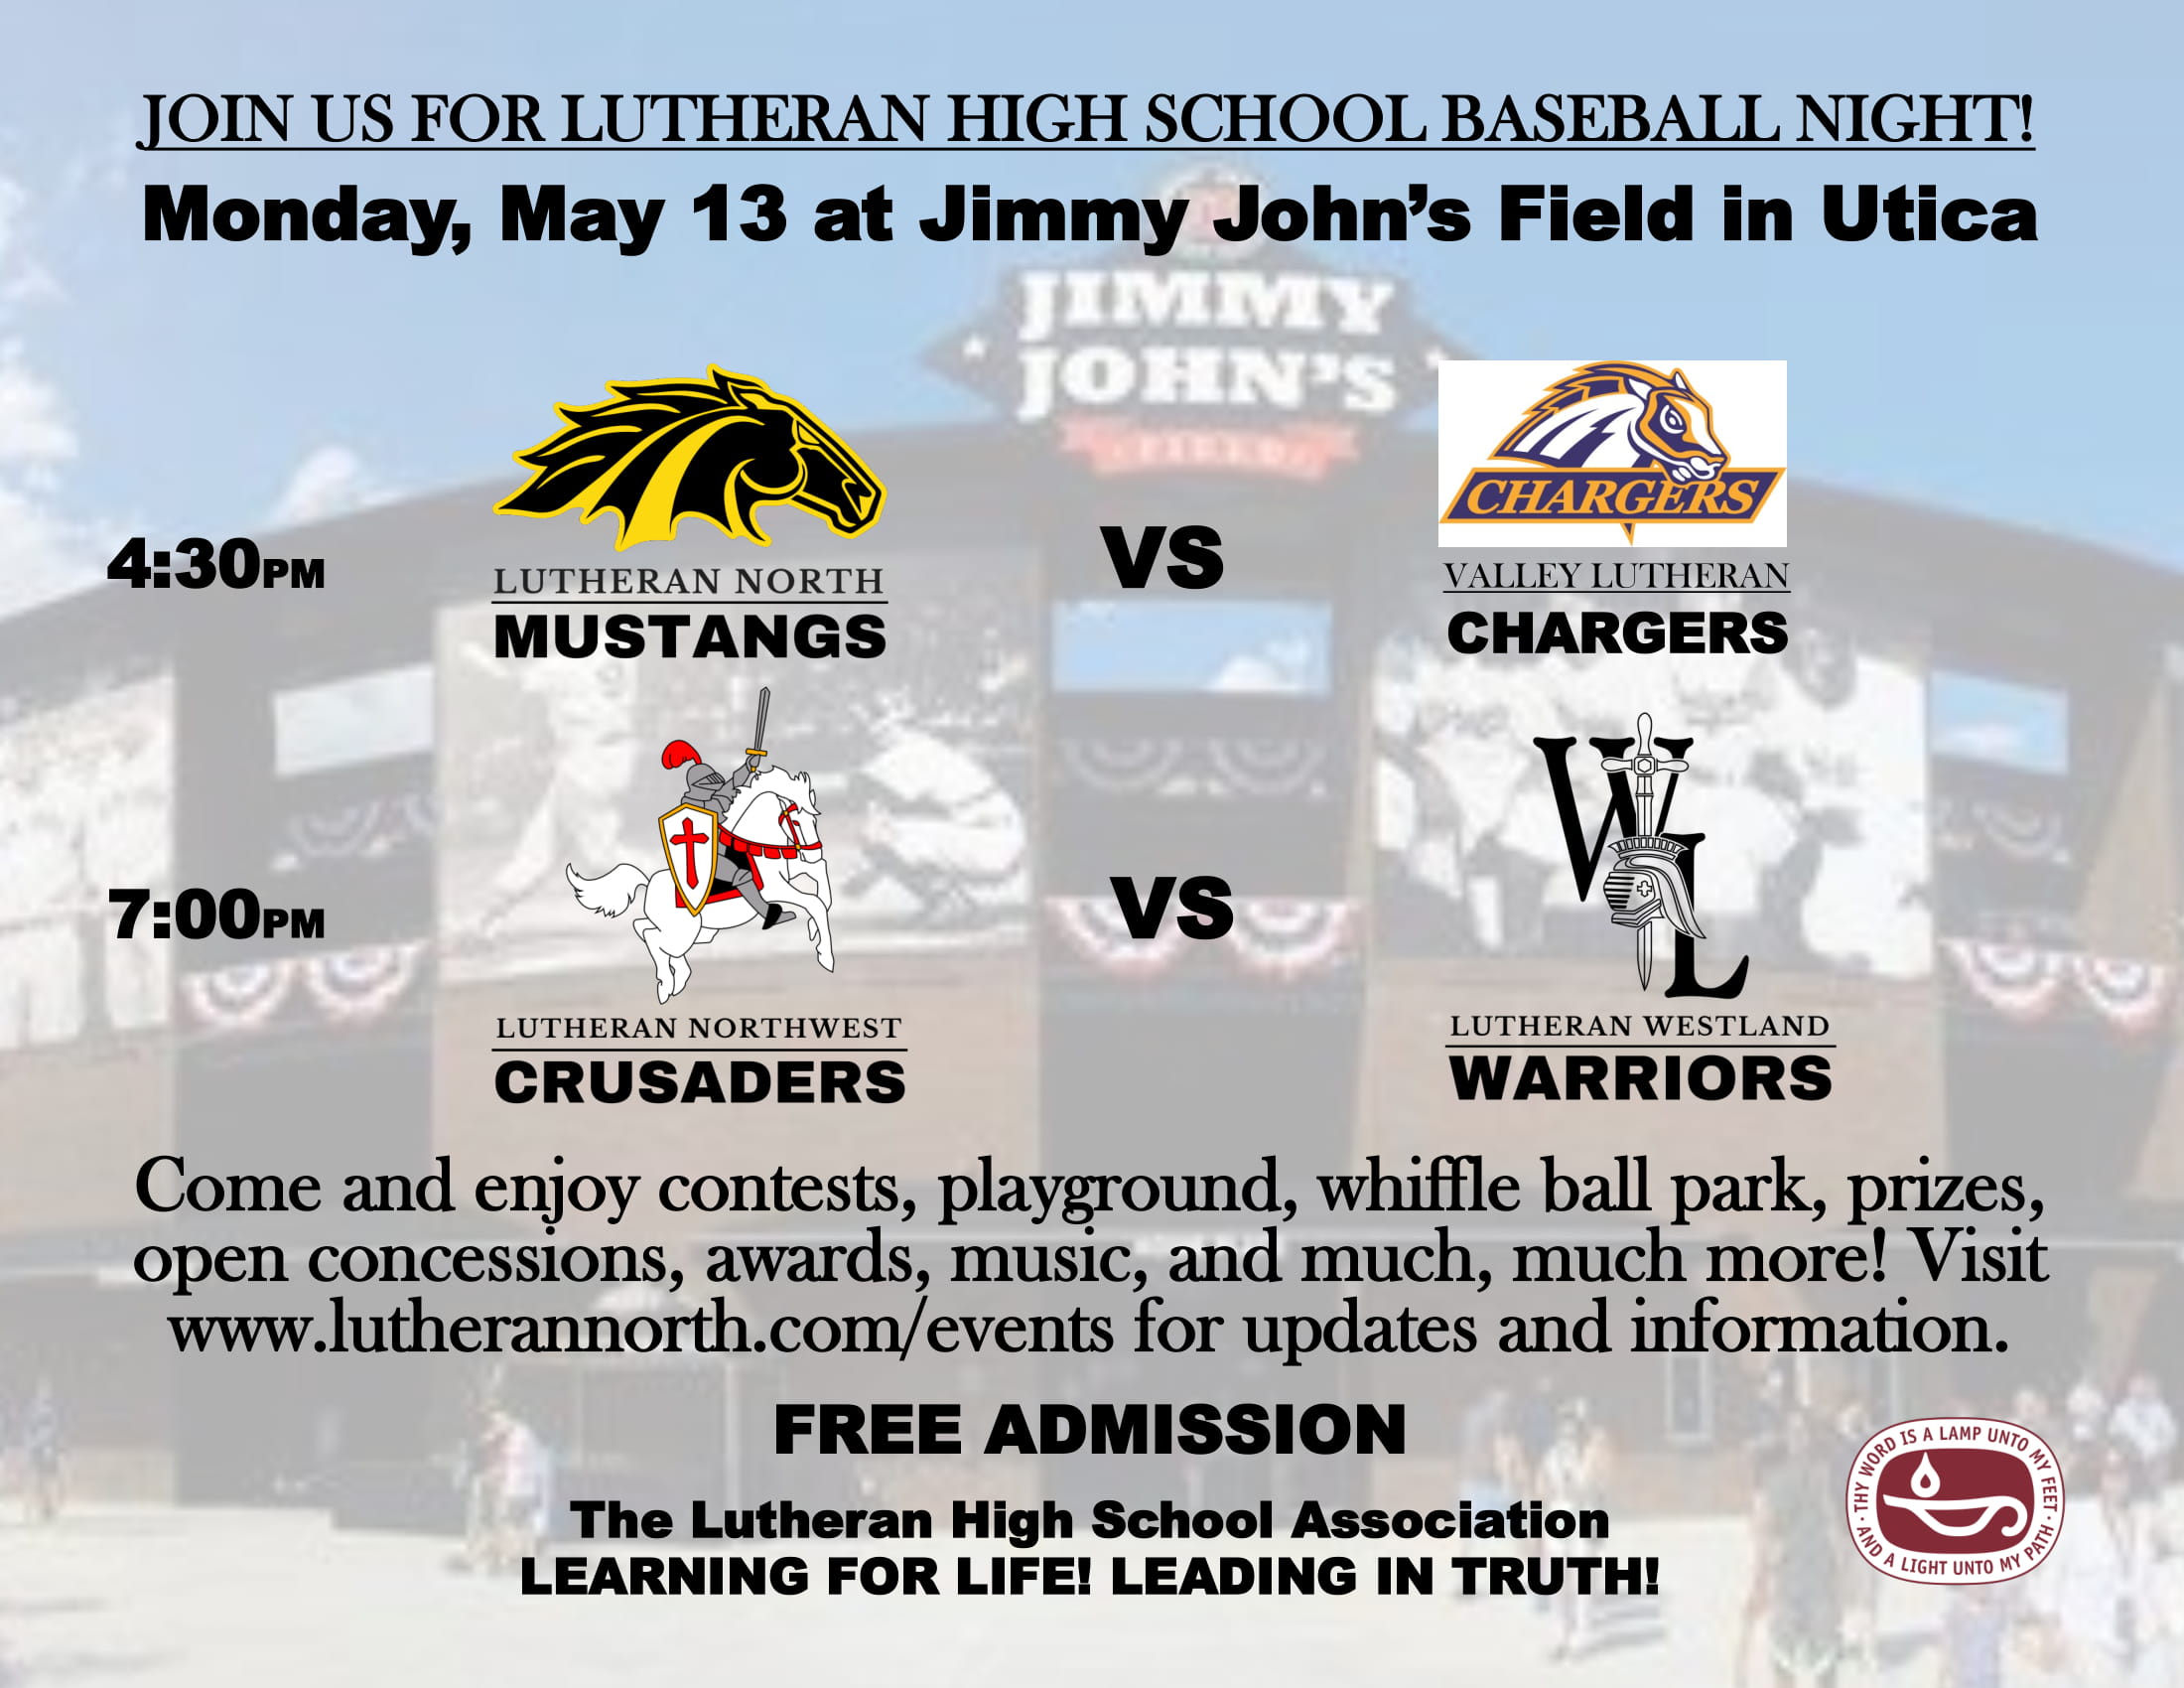 Lutheran High School Baseball Night is May 13th at Jimmy John's Field in Utica, MI